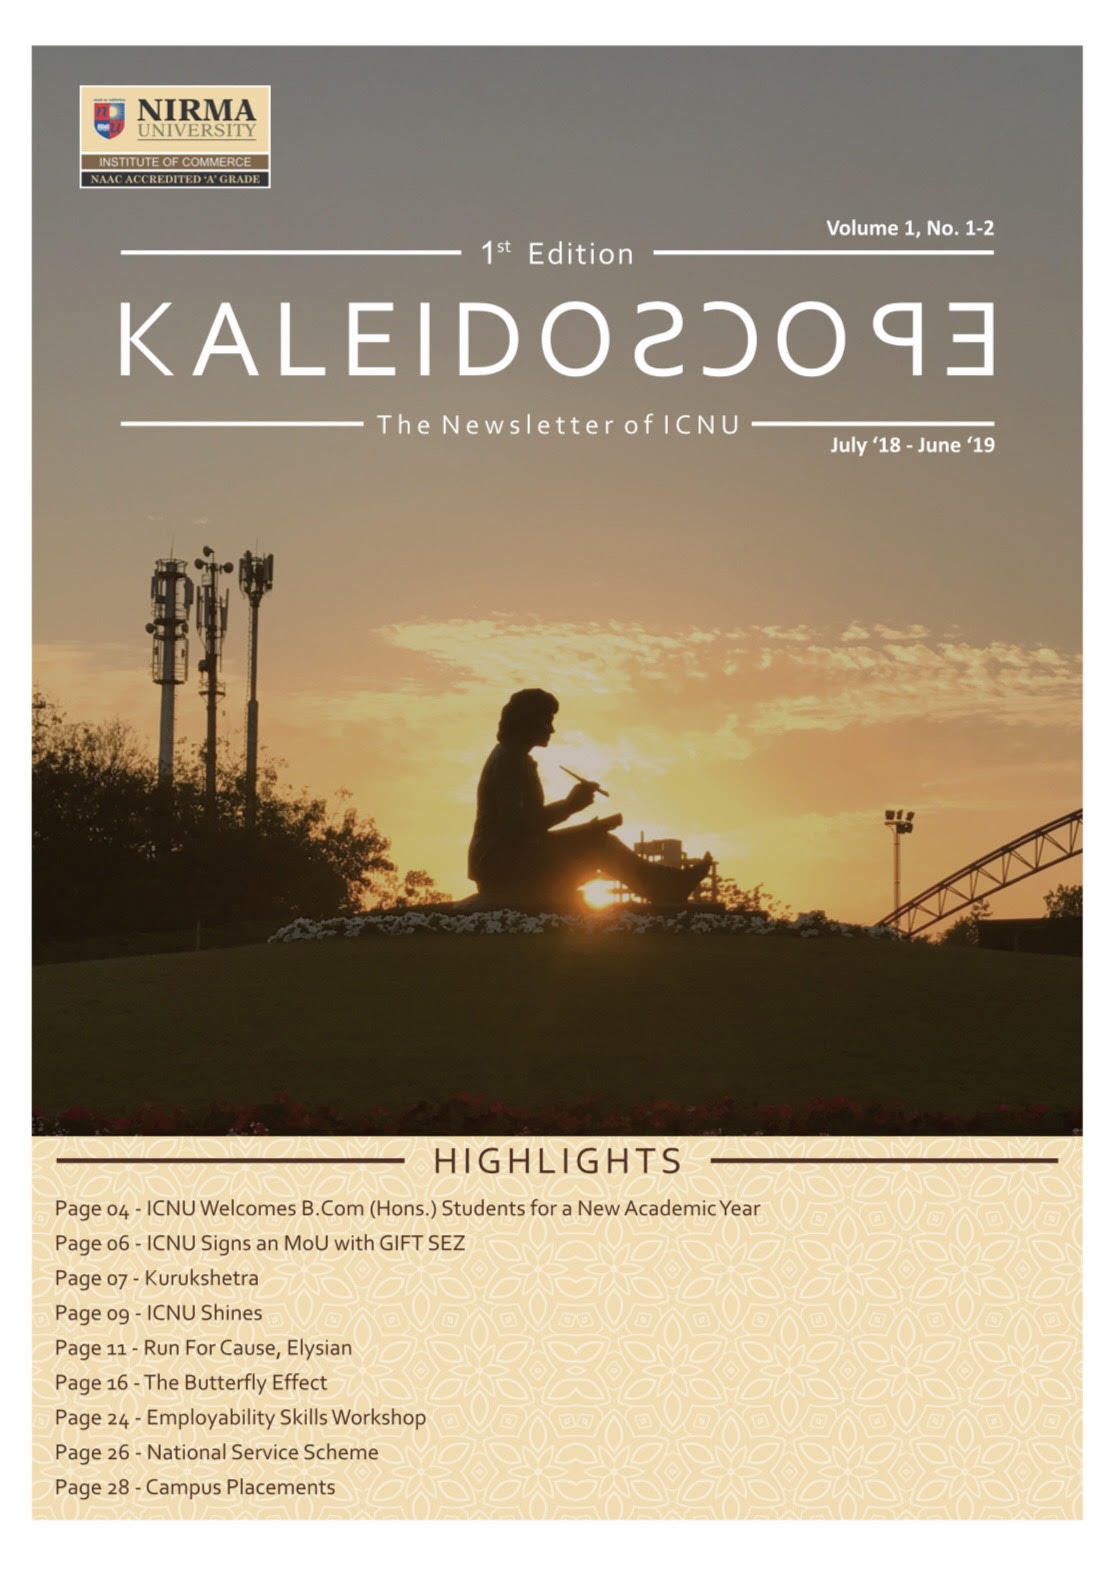 Kaleidoscope Volume 1, No. 1-2